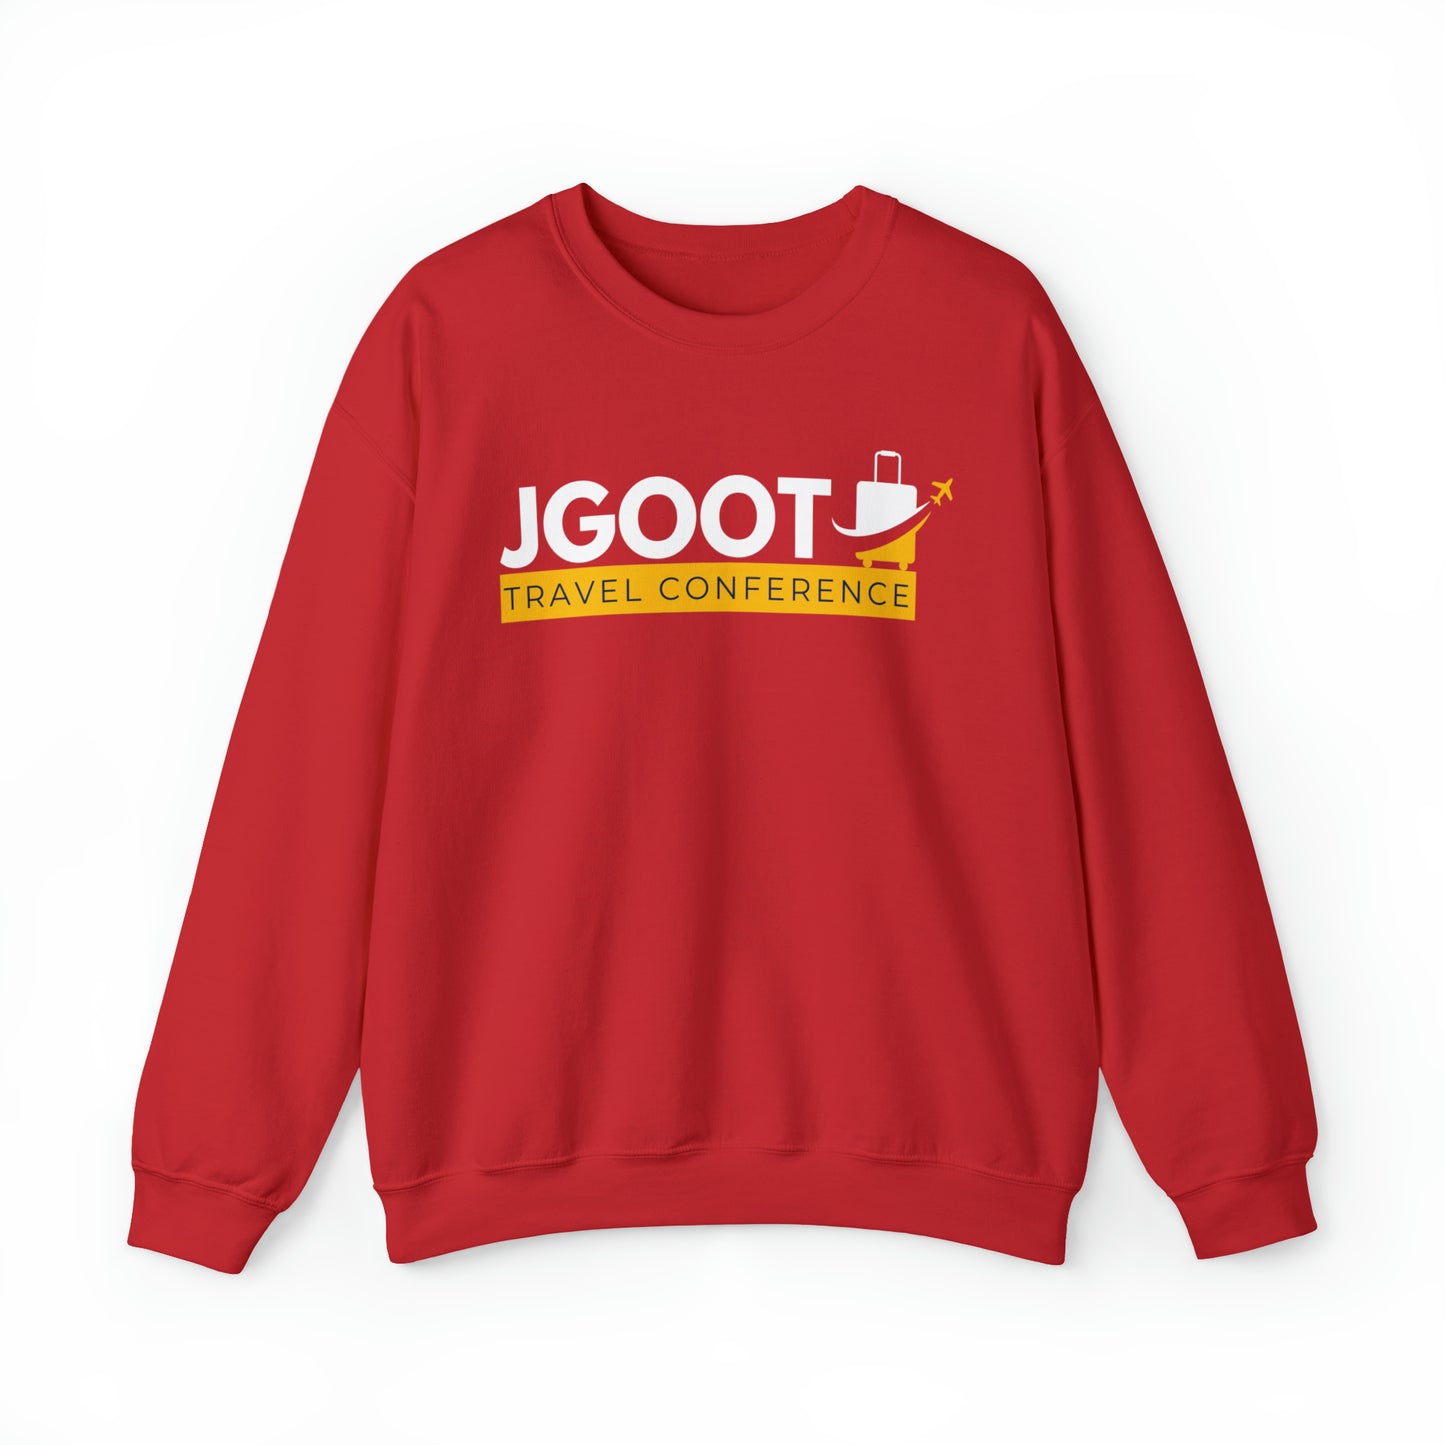 JGOOT Conference Crewneck Sweatshirt